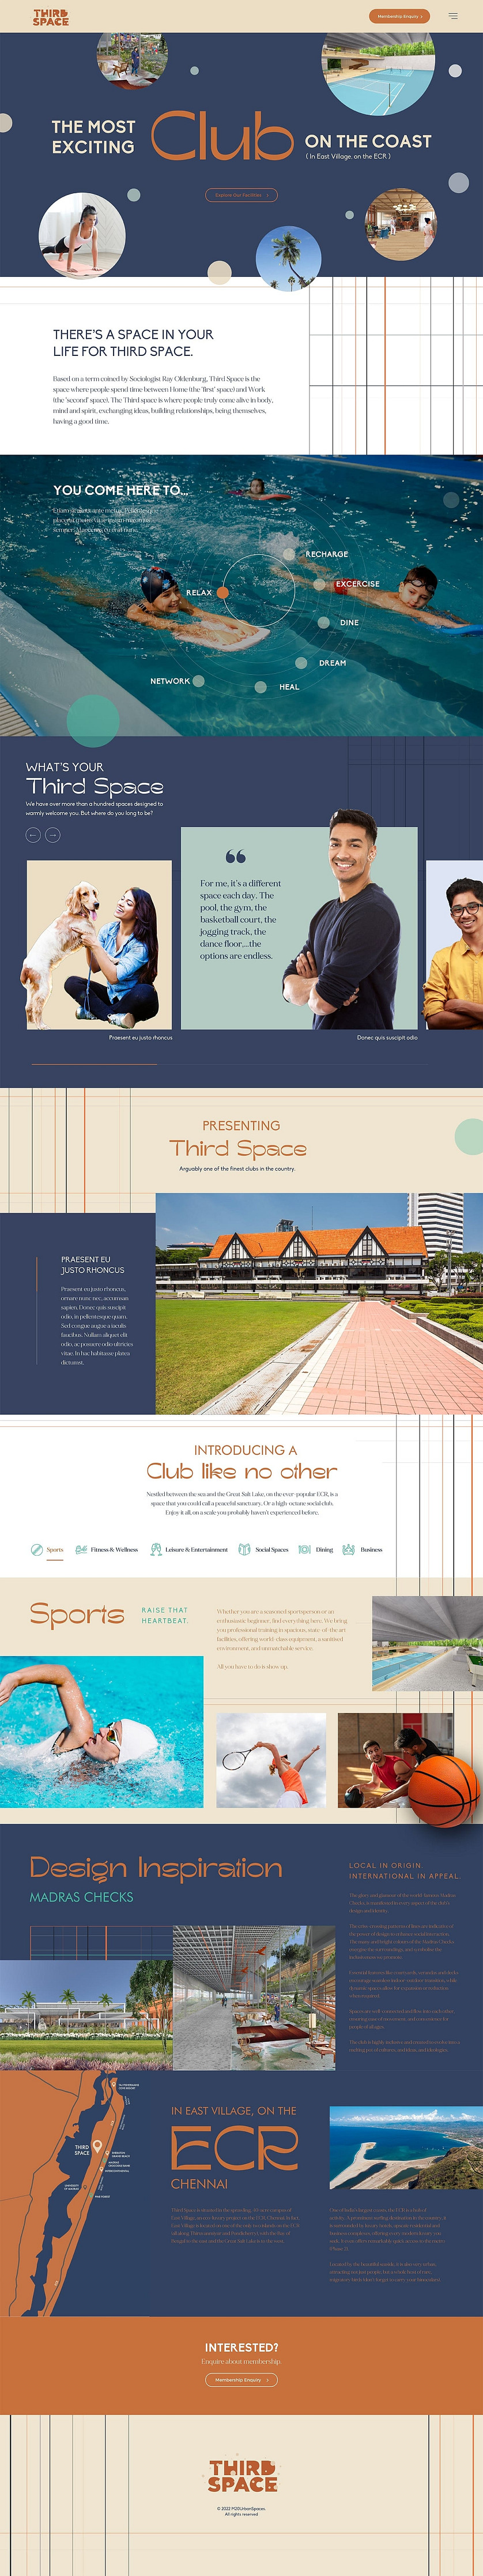 ThirdSpace Chennai - M20UrbanSpaces Website Design image 1